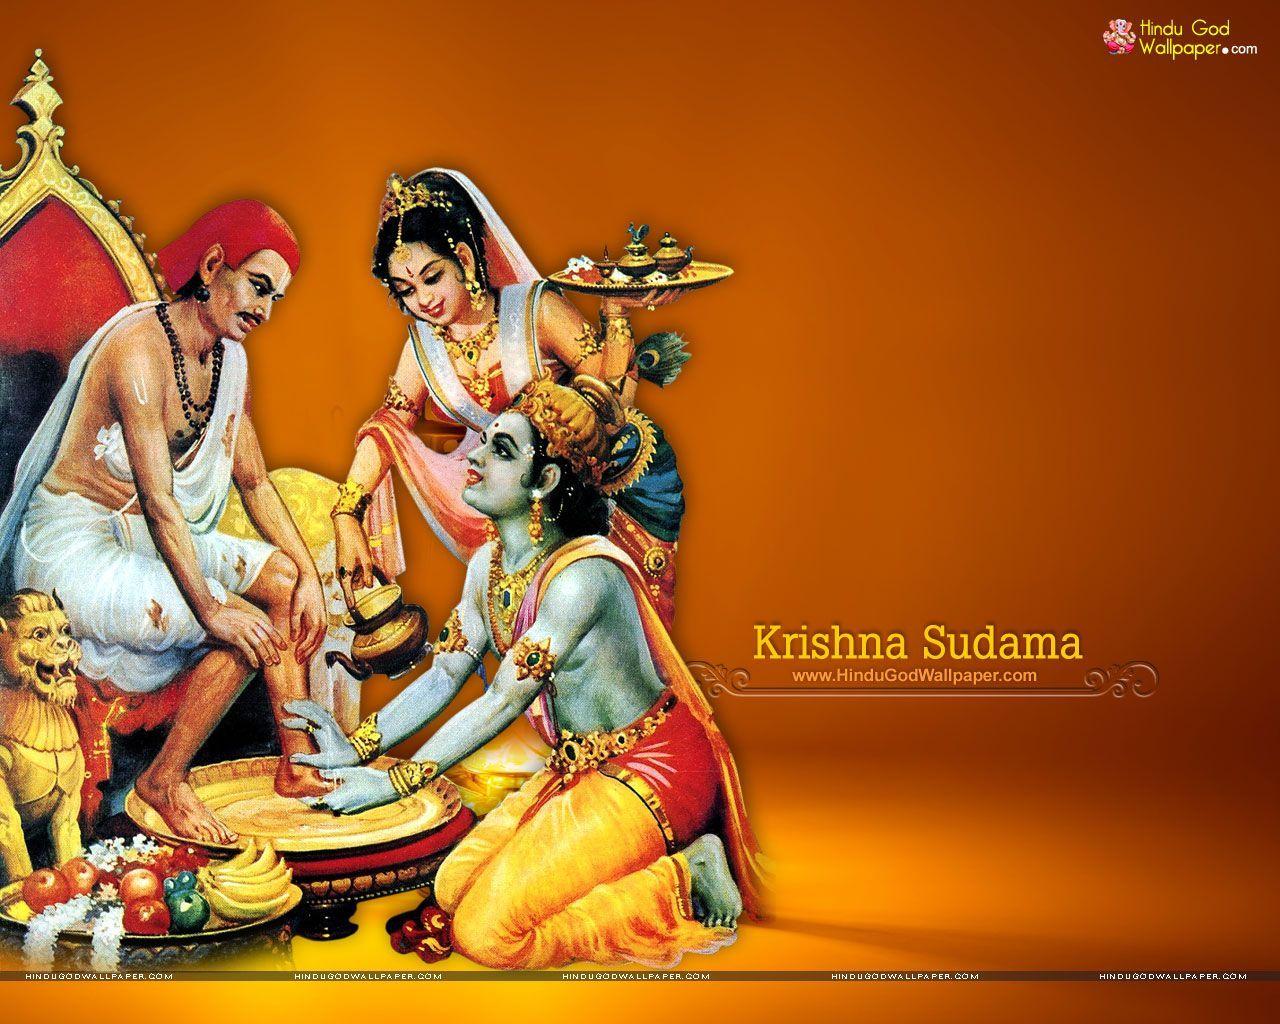 Krishna Sudama Wallpapers - Top Free Krishna Sudama Backgrounds ...